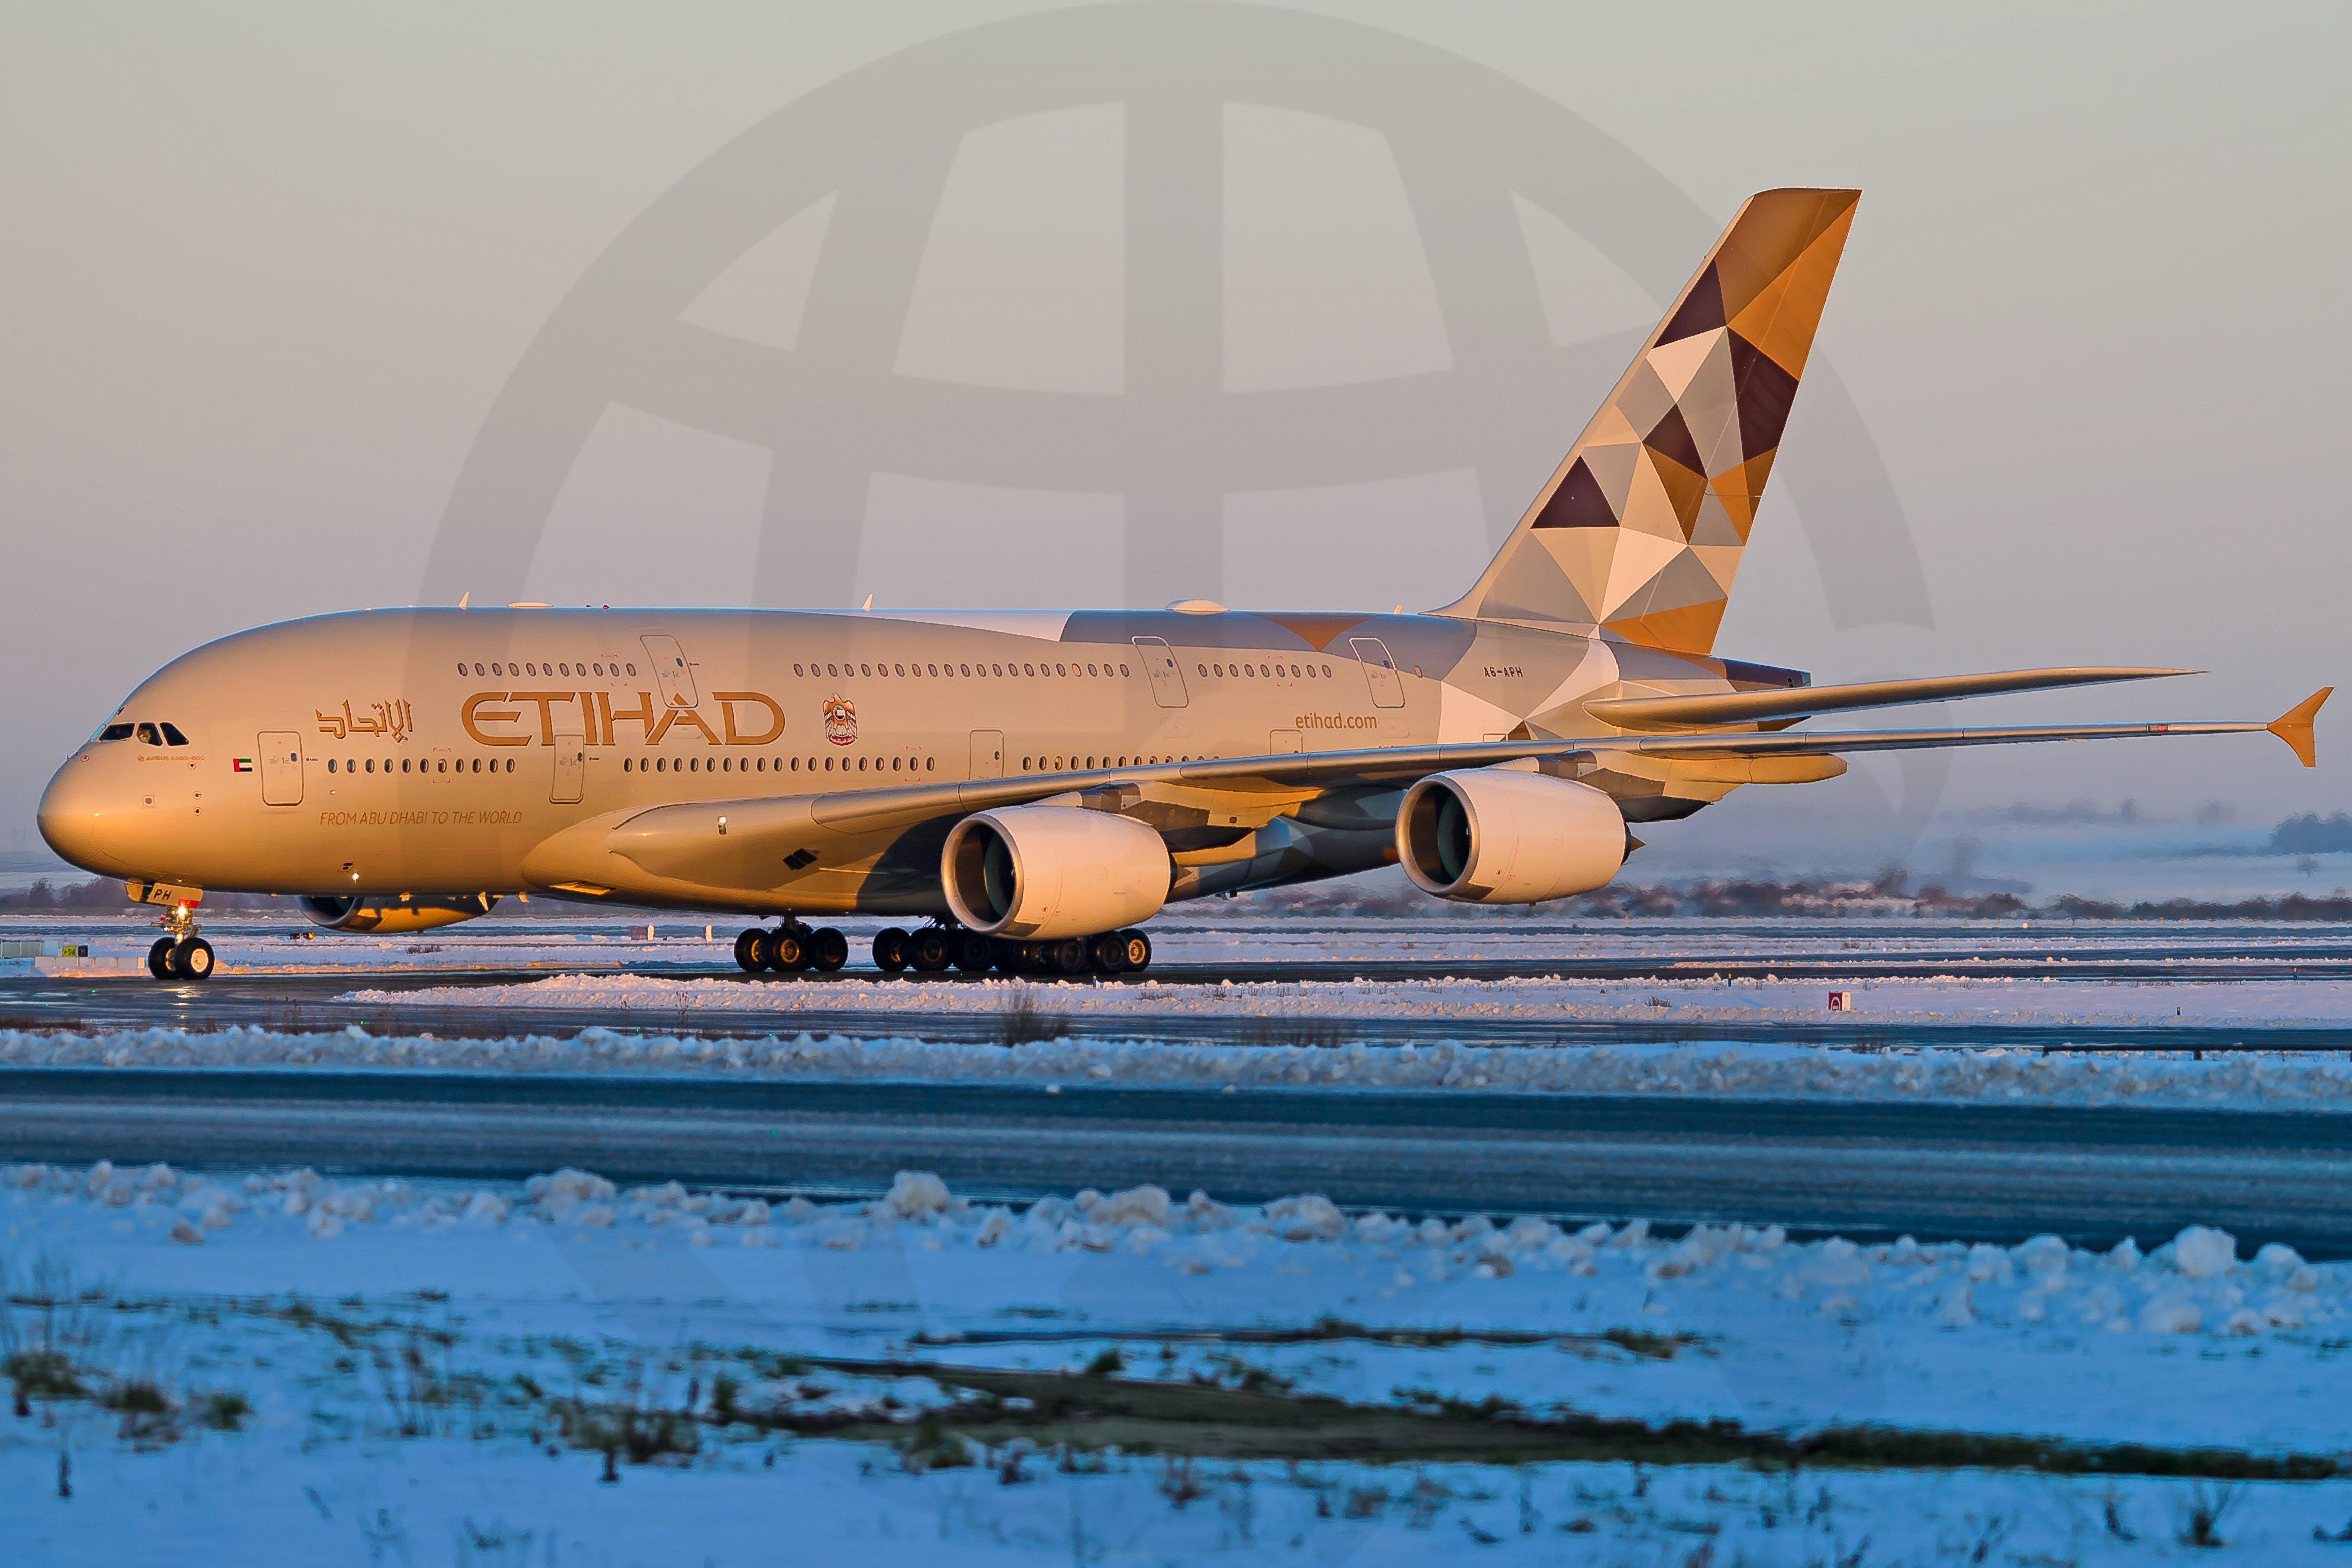 Photo of A6-APH - Etihad Airways Airbus A380-800